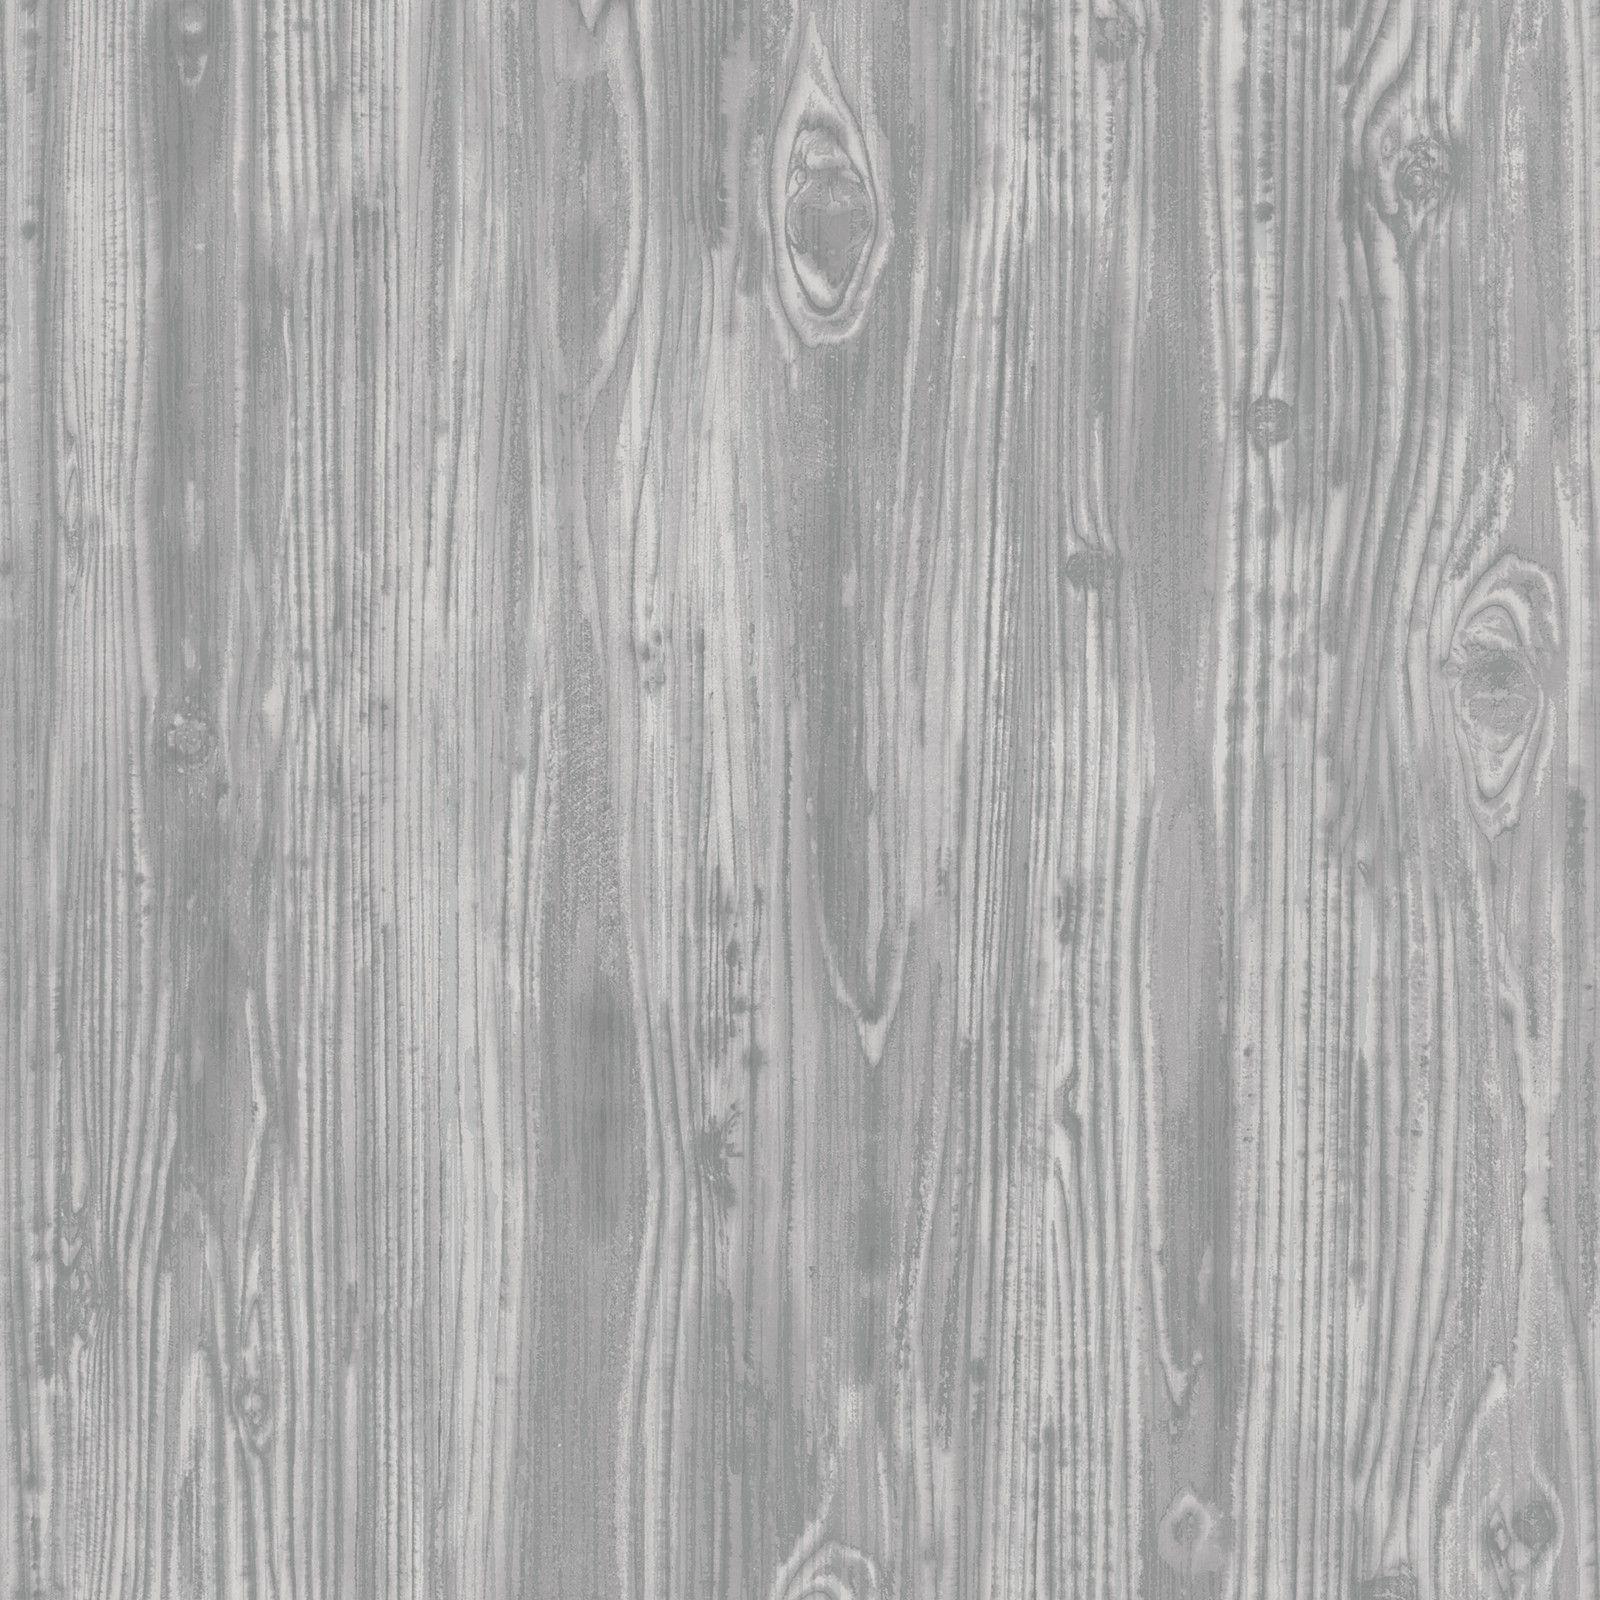 faux wood grain paint. Wood wallpaper, Wood grain wallpaper, Removable wallpaper